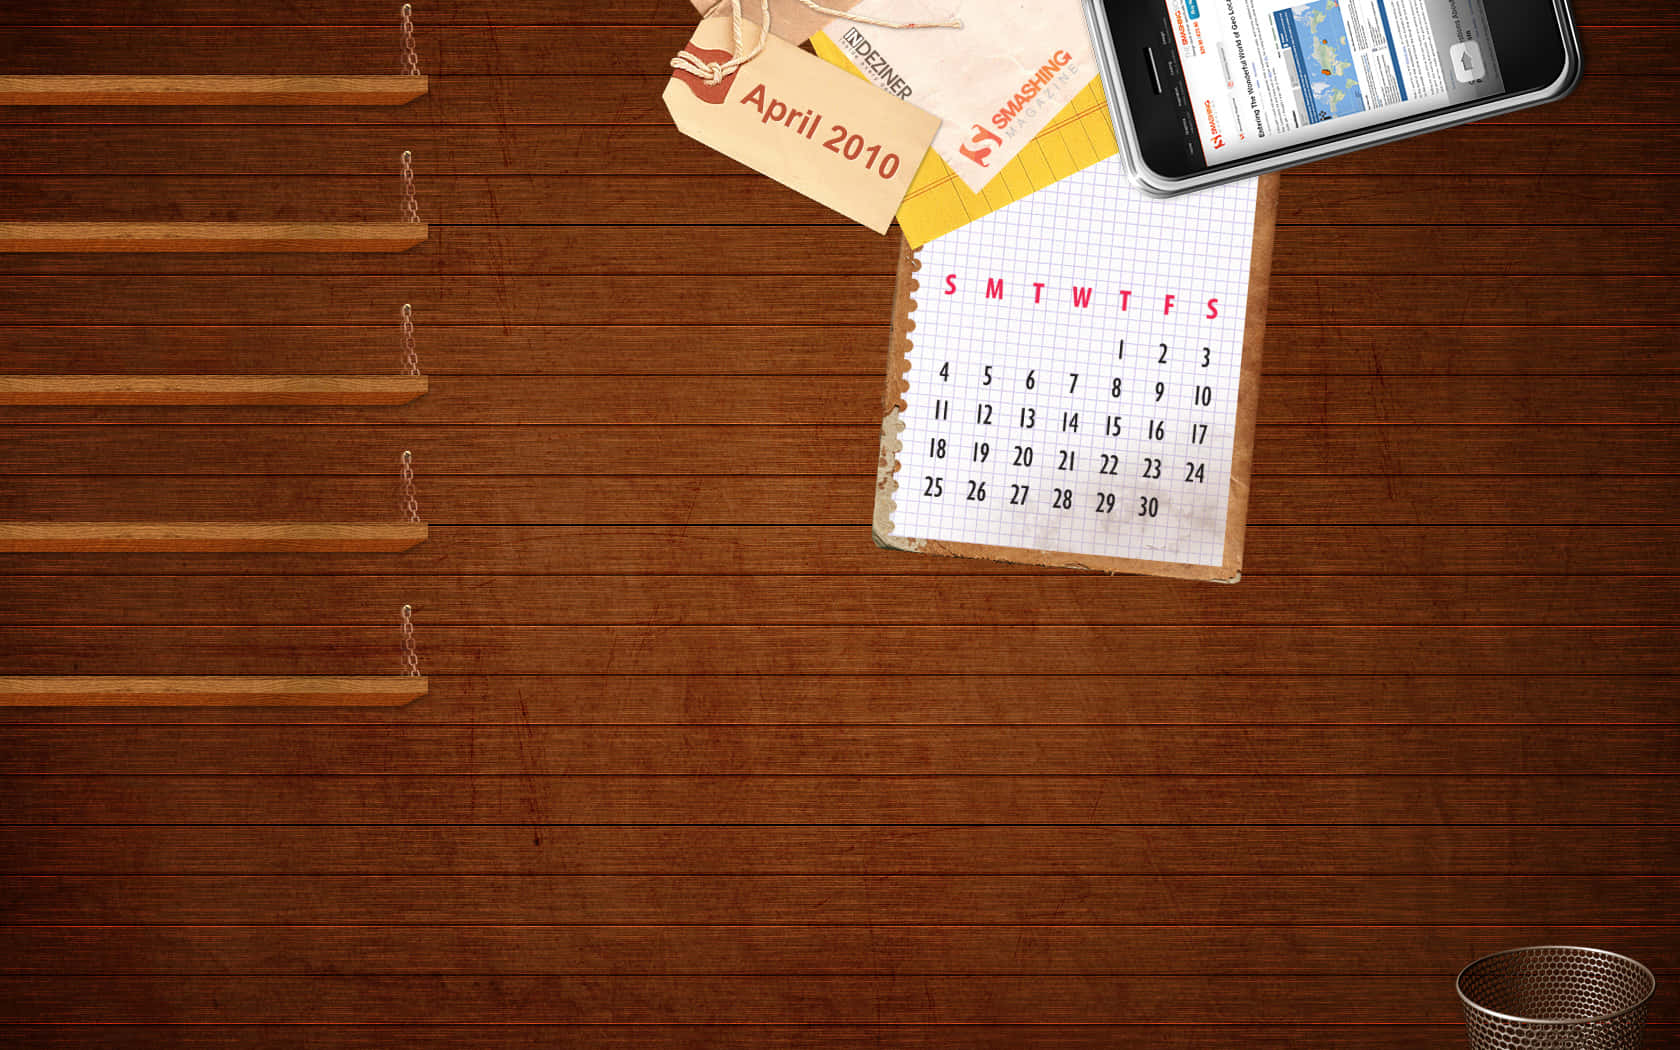 Et skrivebord med en kalender og en telefon.